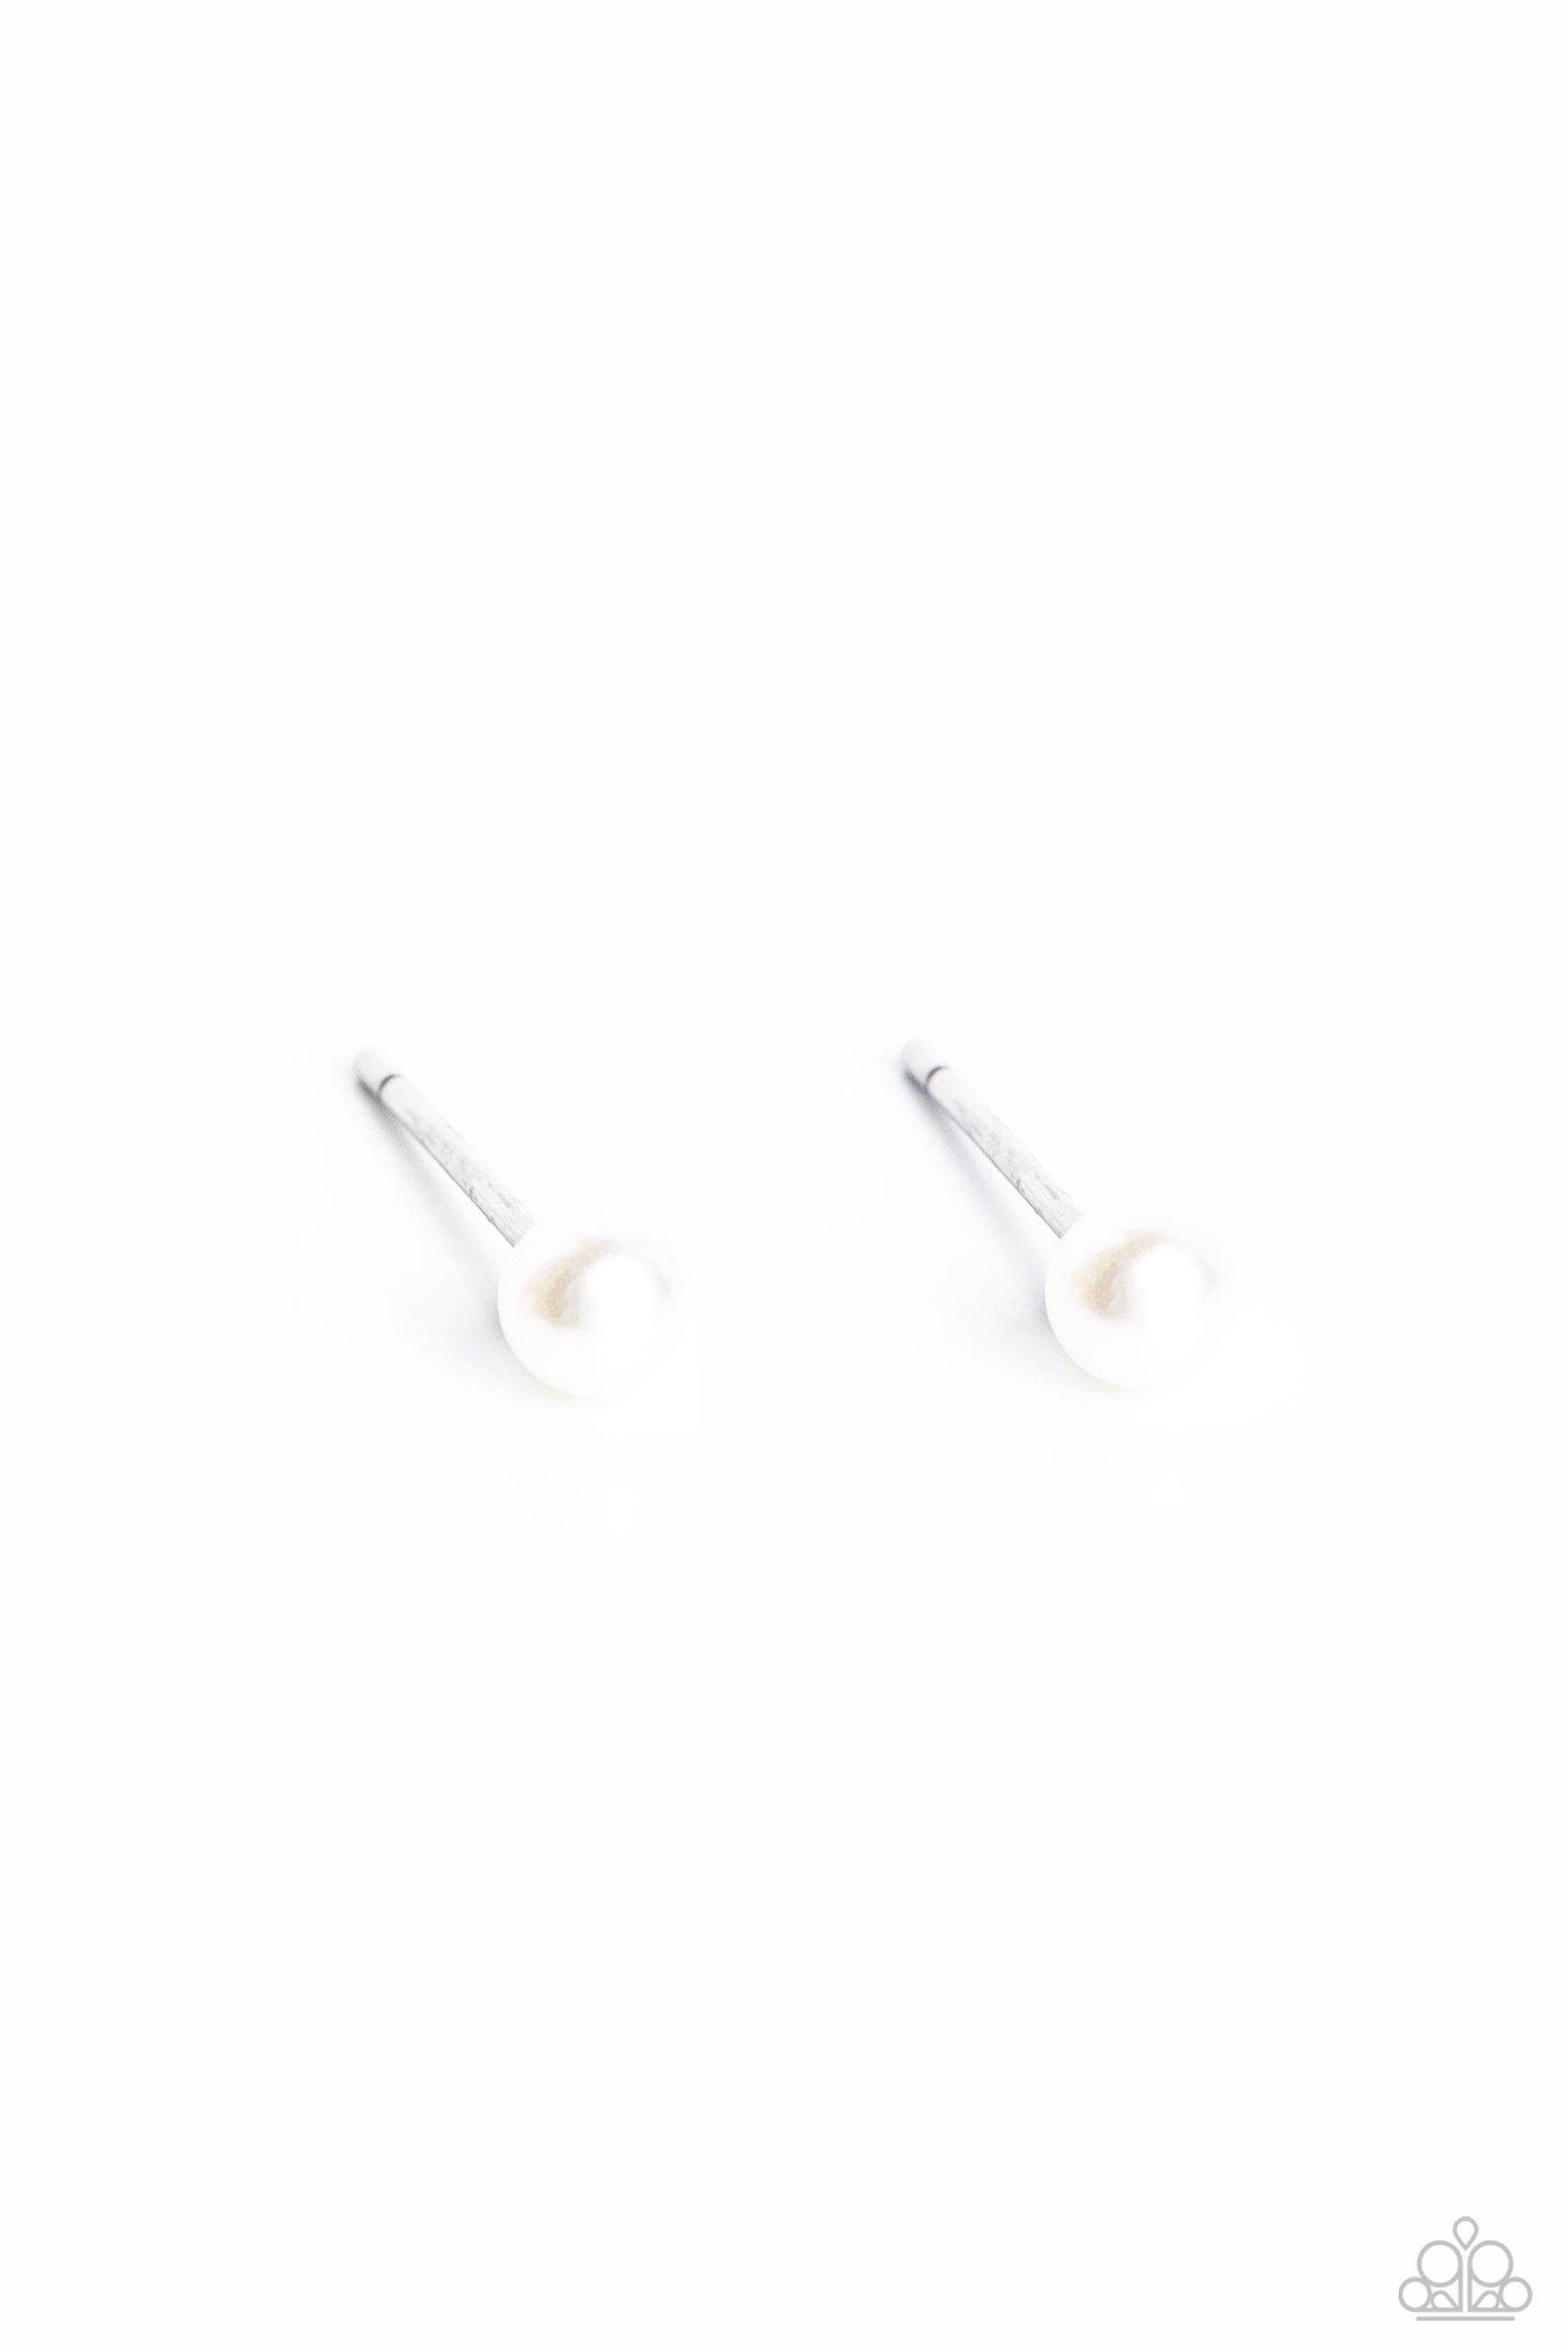 Paparazzi Accessories - Dainty Details - White Earrings - Bling by JessieK